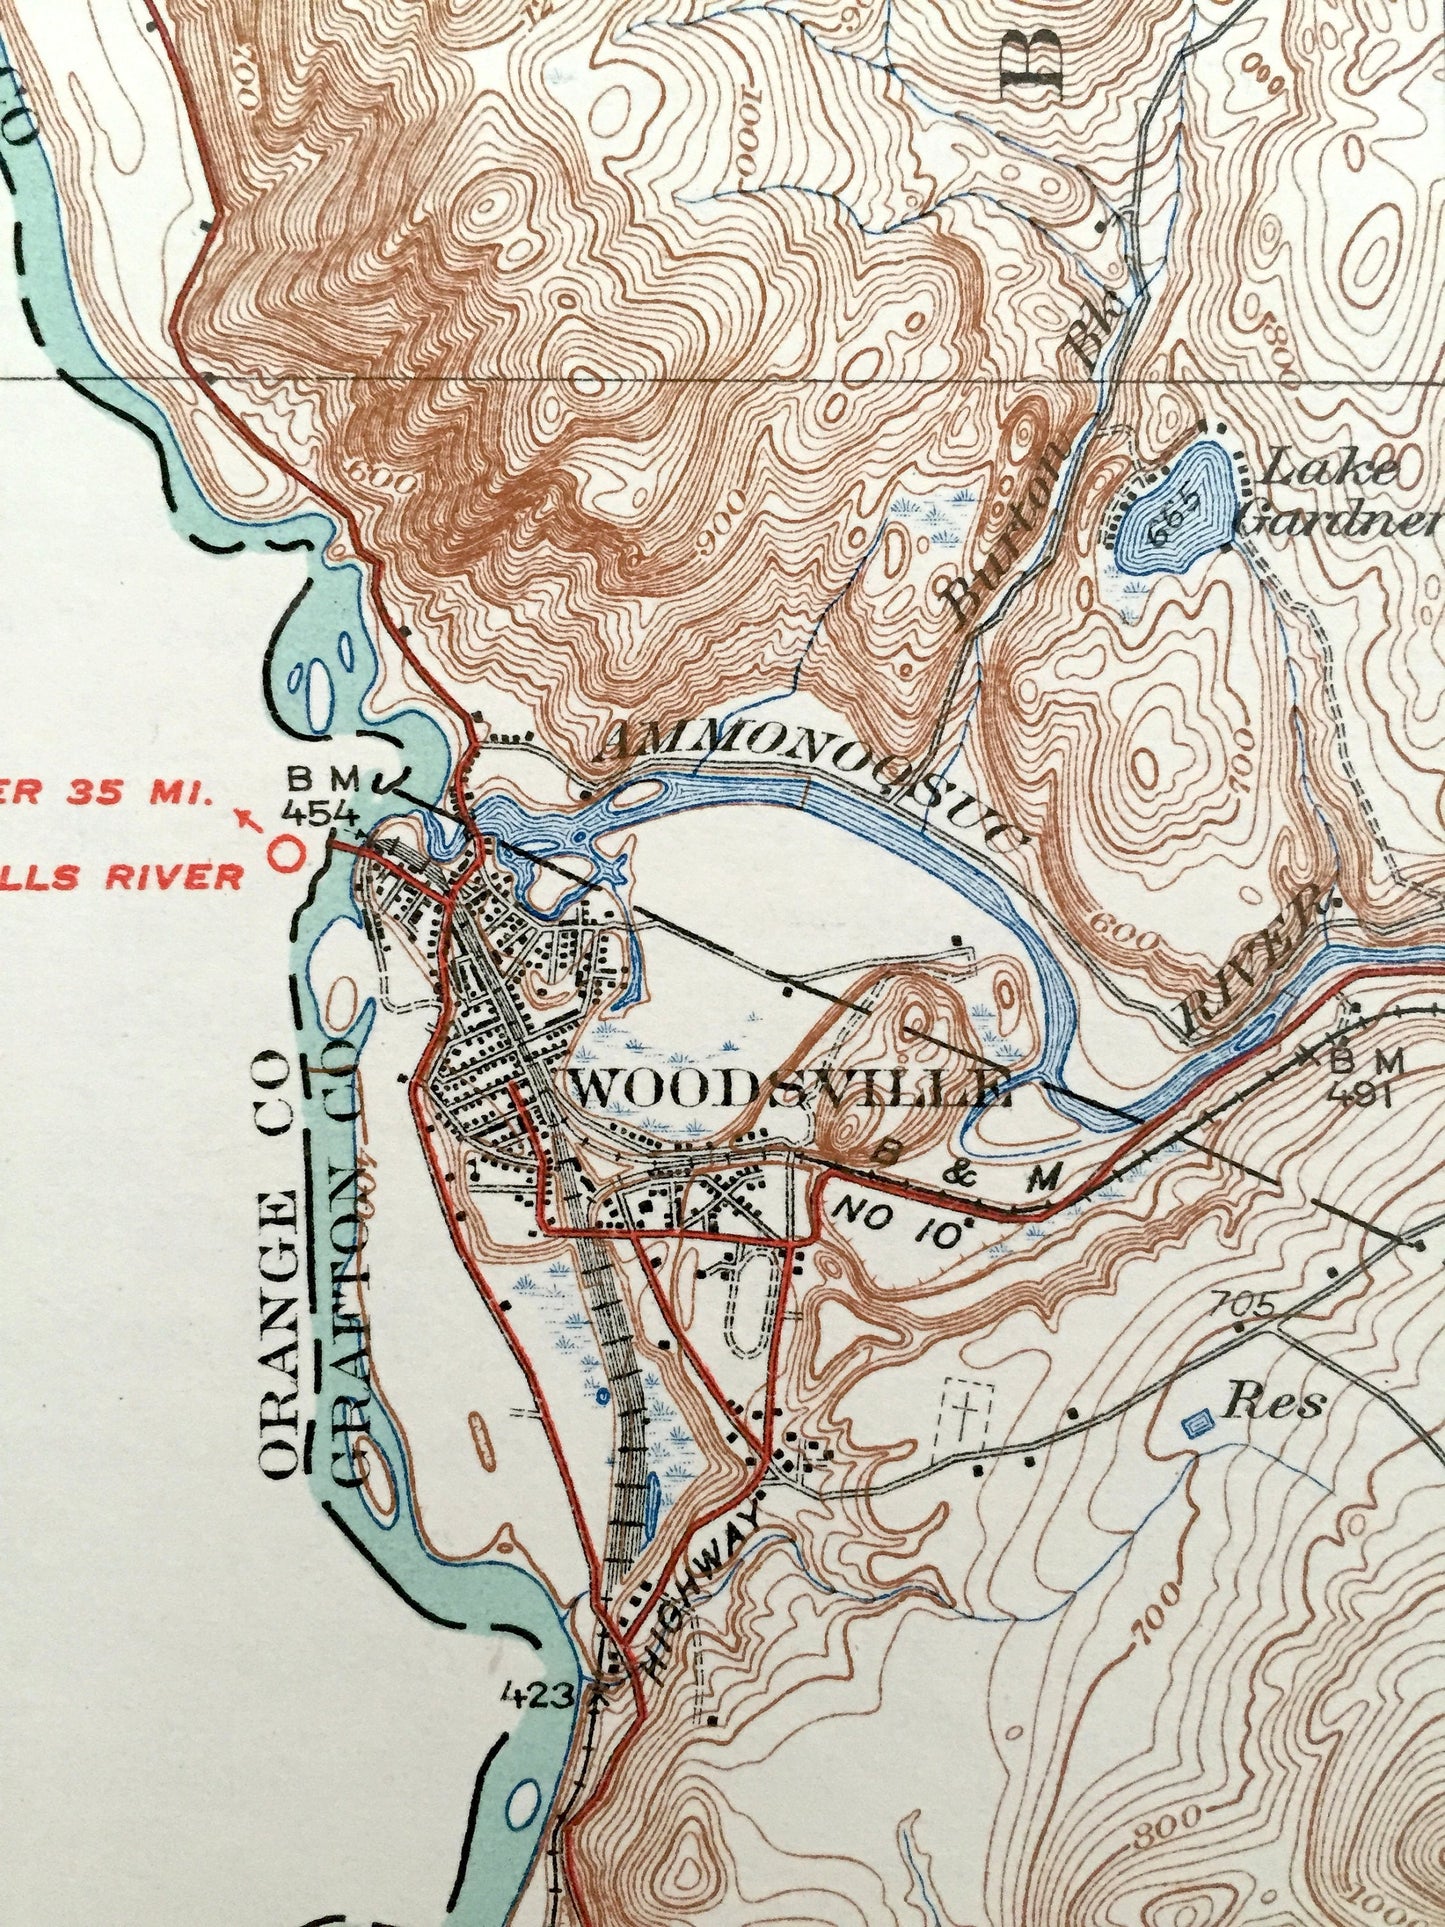 Antique Woodsville, New Hampshire 1935 US Geological Survey Topographic Map – Grafton County, Bath, Haverhill, Piermont, Monroe, Lyman, NH